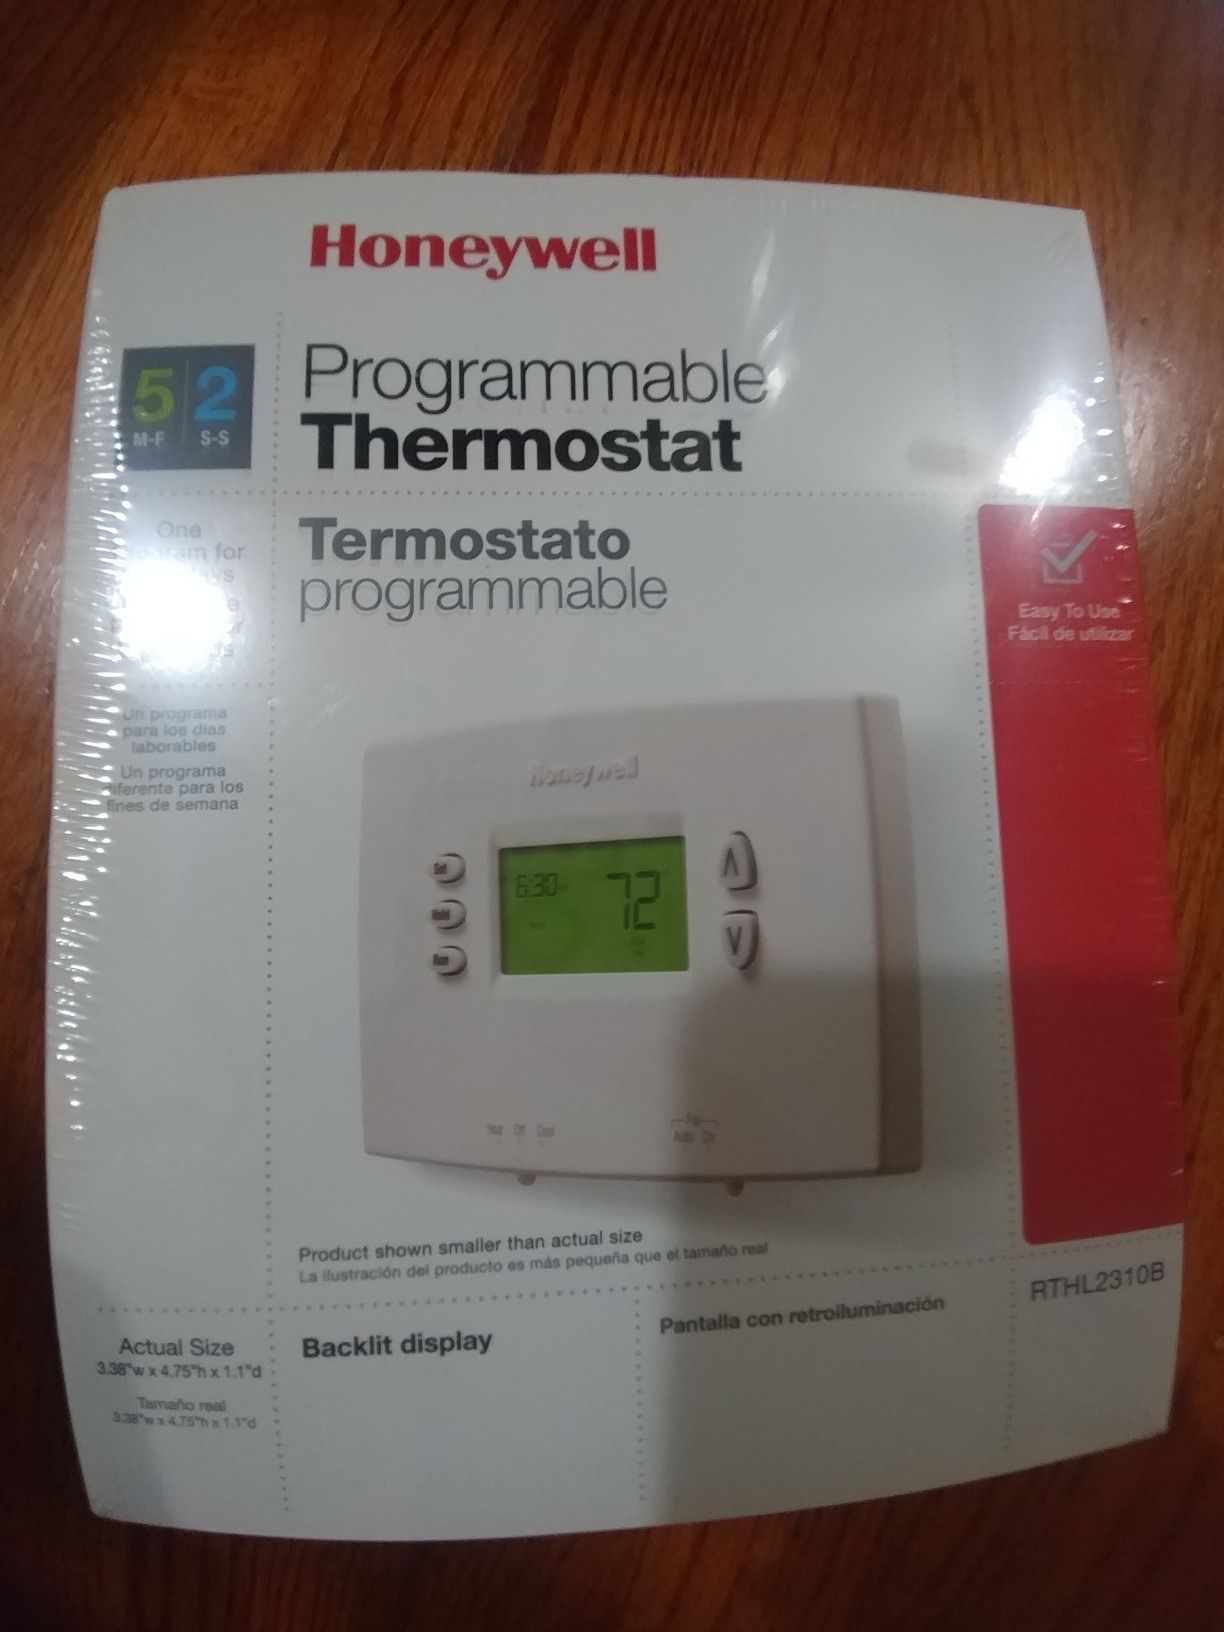 Honeywell 5-2 programable thermostat